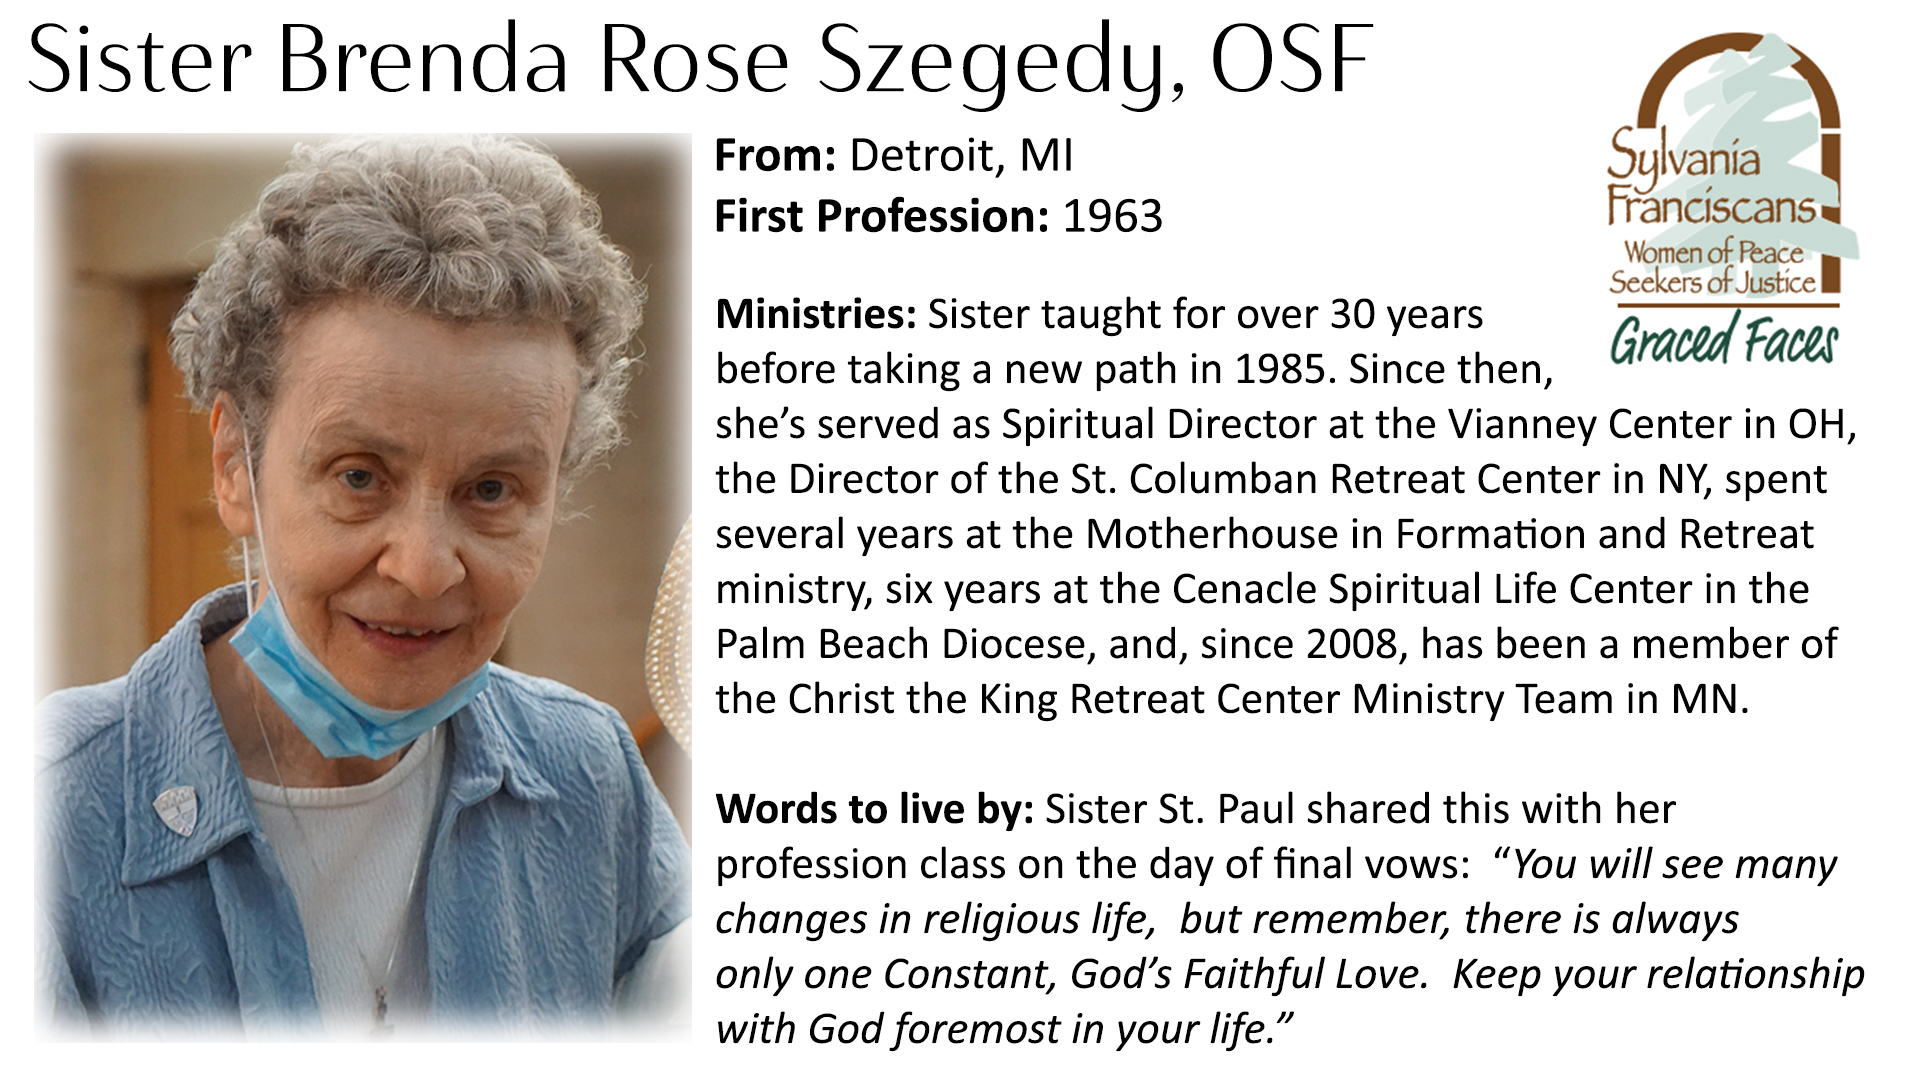 Sister Brenda Rose Szegedy Graced Faces OSF